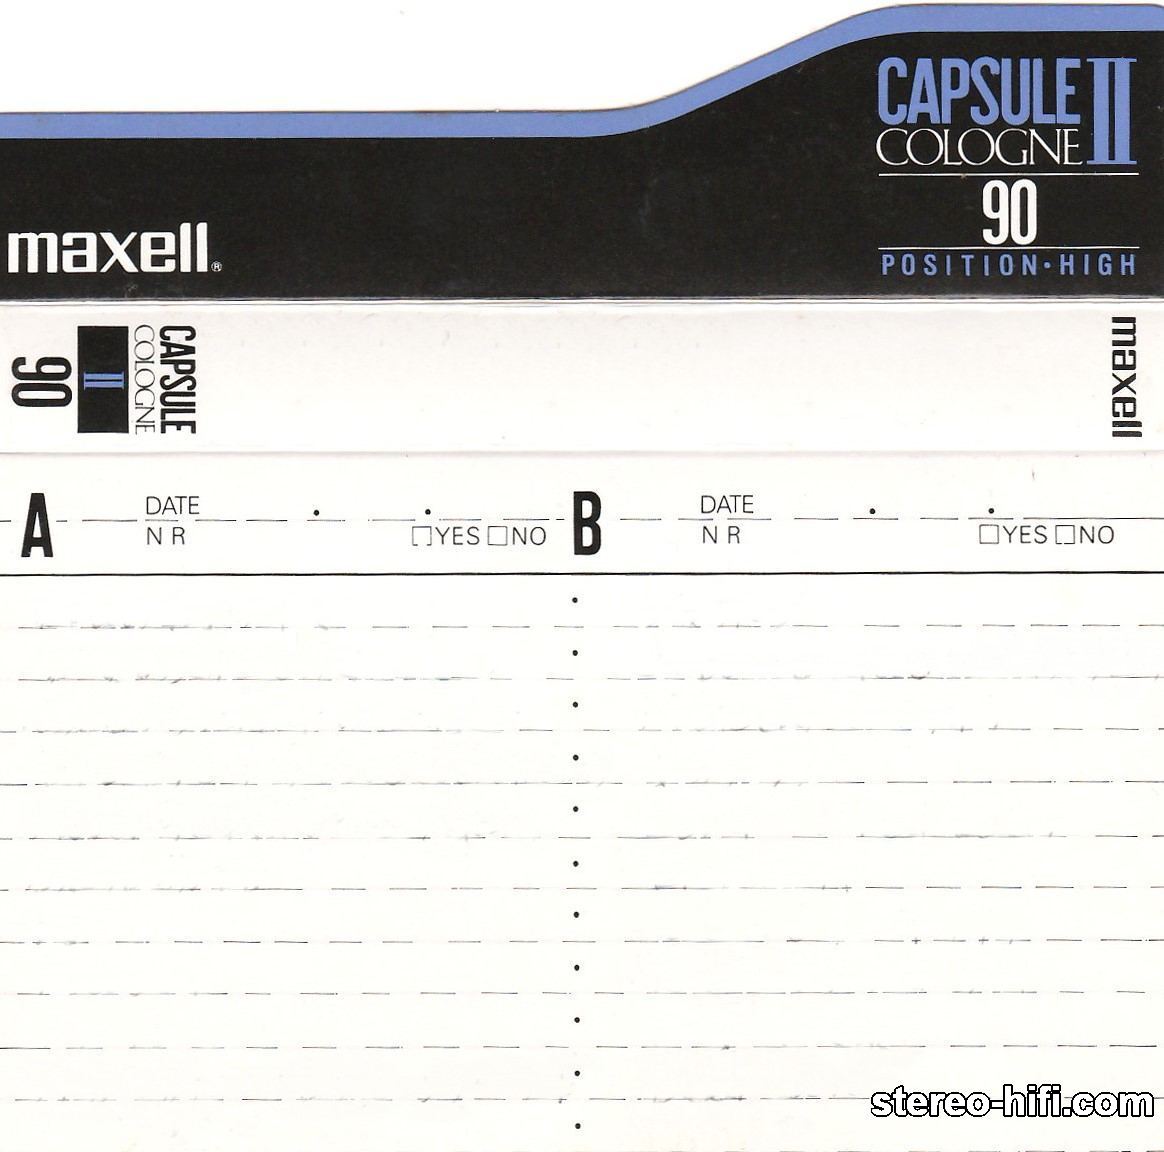 Maxell Capsule Cologne II  C90 1990 JP